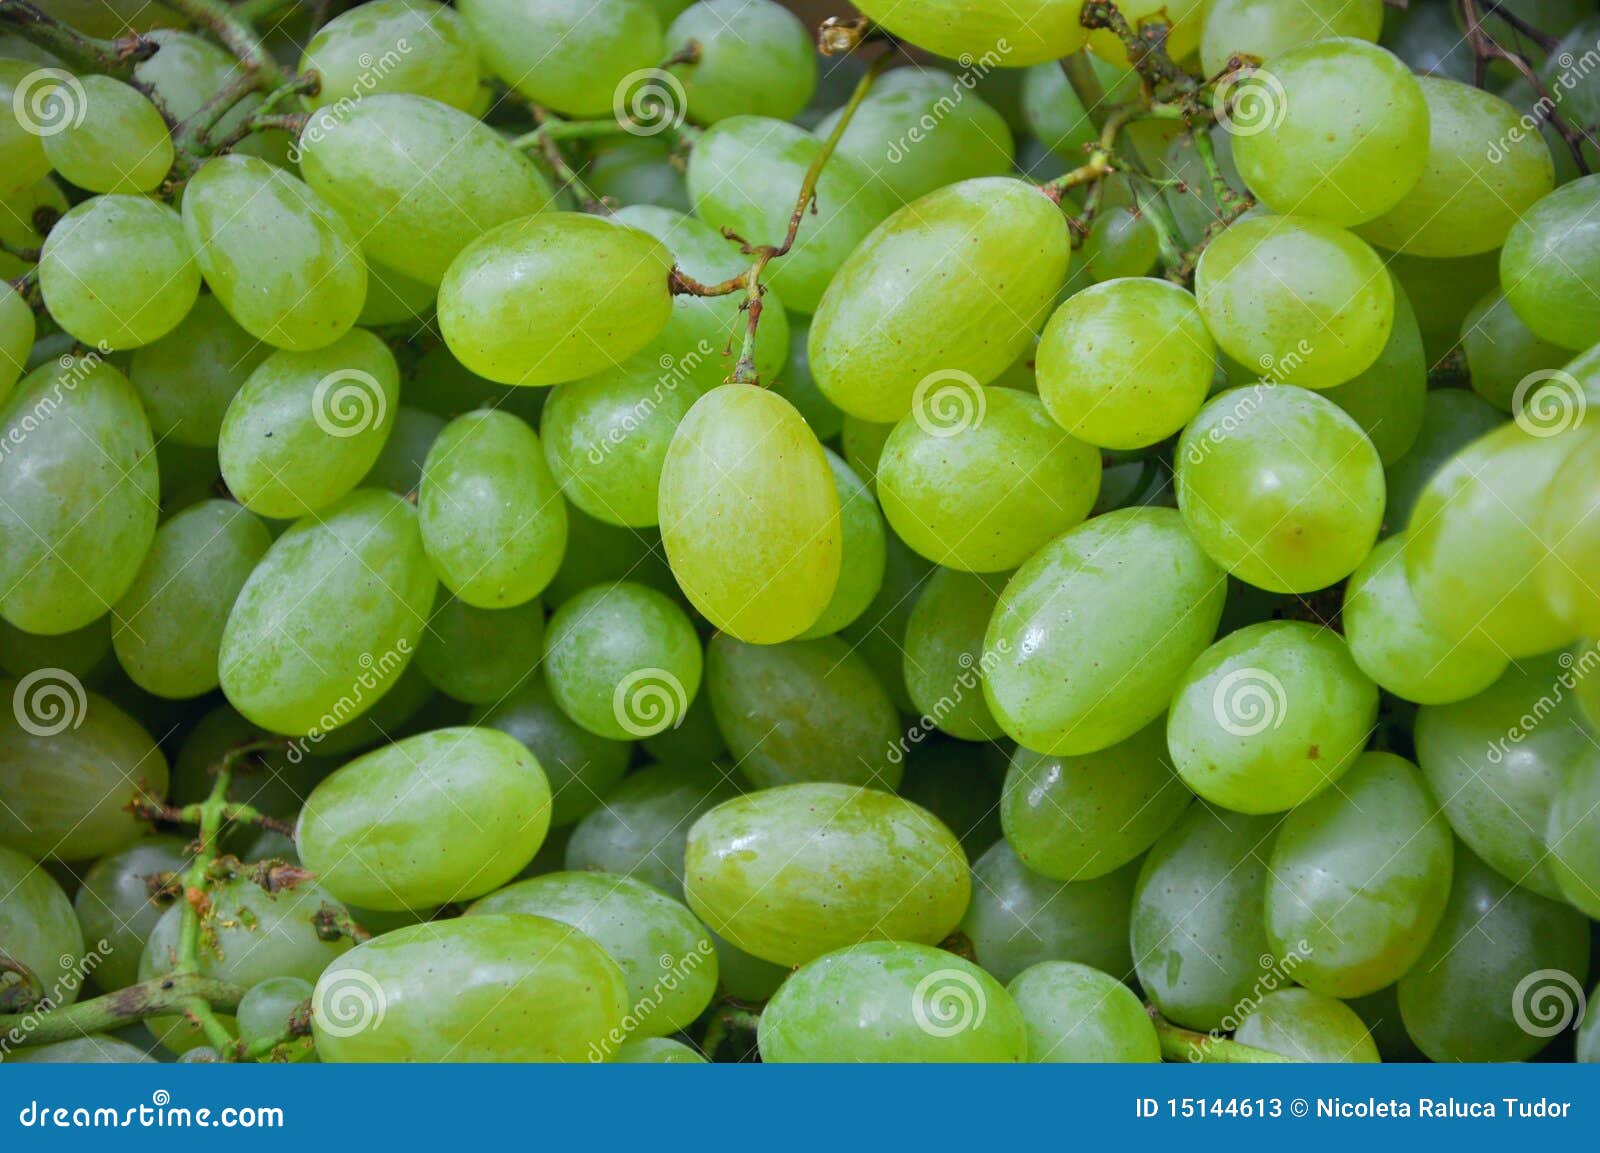 https://thumbs.dreamstime.com/z/organic-green-grapes-market-15144613.jpg